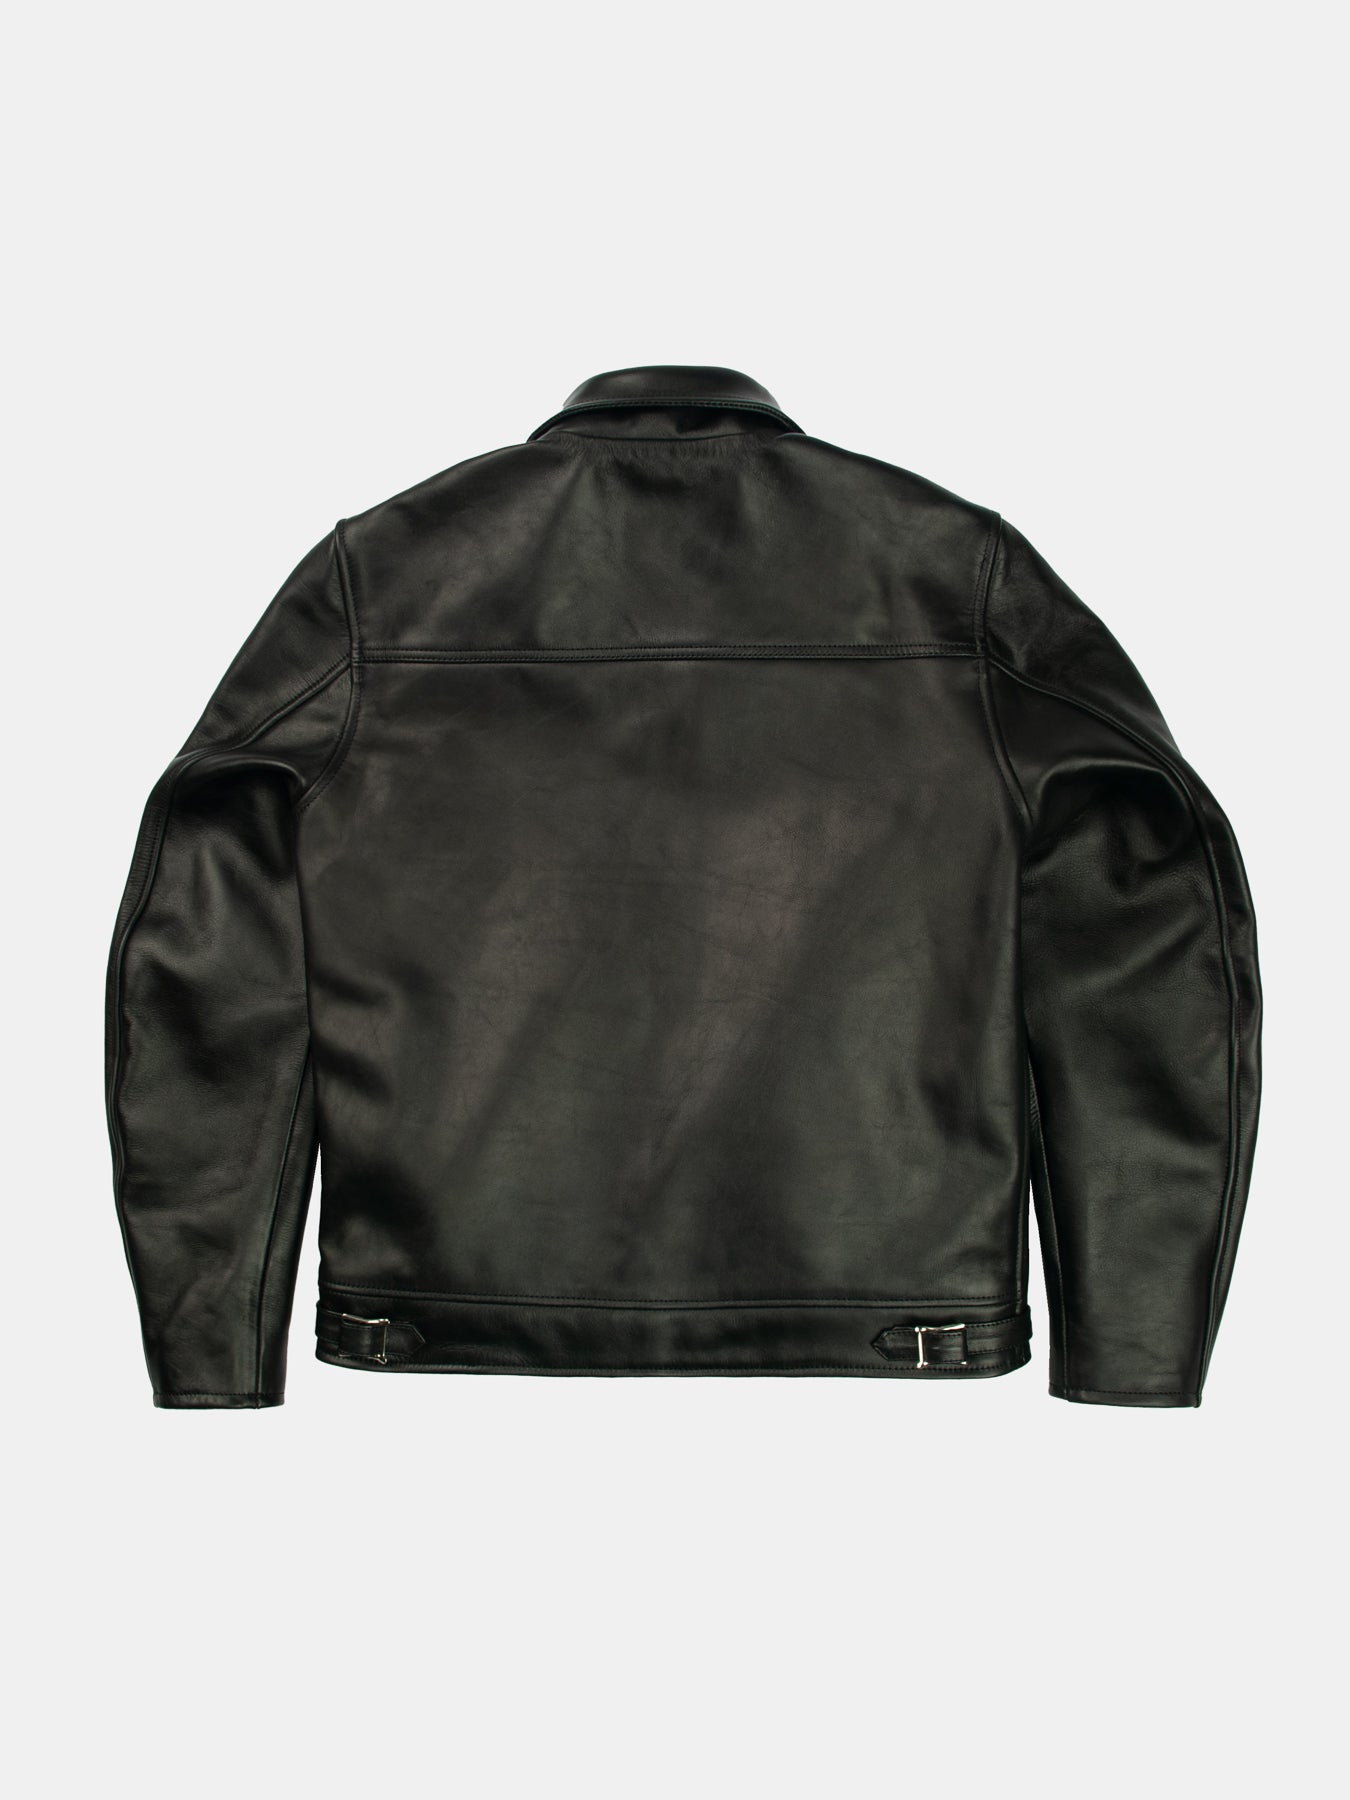 Mutt Bolt Thrower Leather Jacket